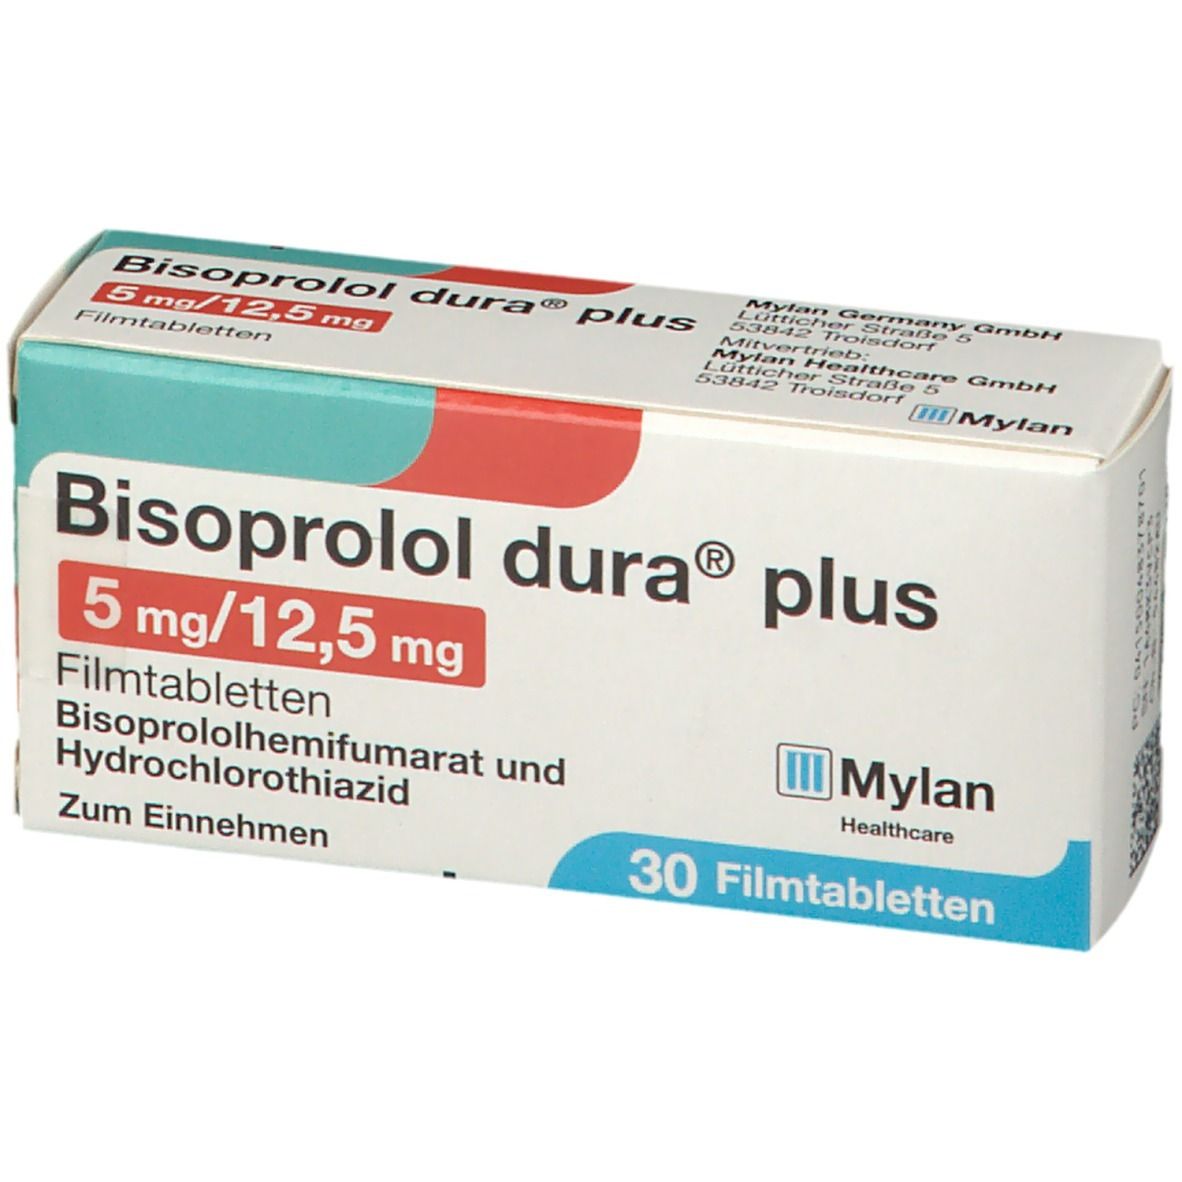 Bisoprolol dura® plus 5 mg/12,5 mg